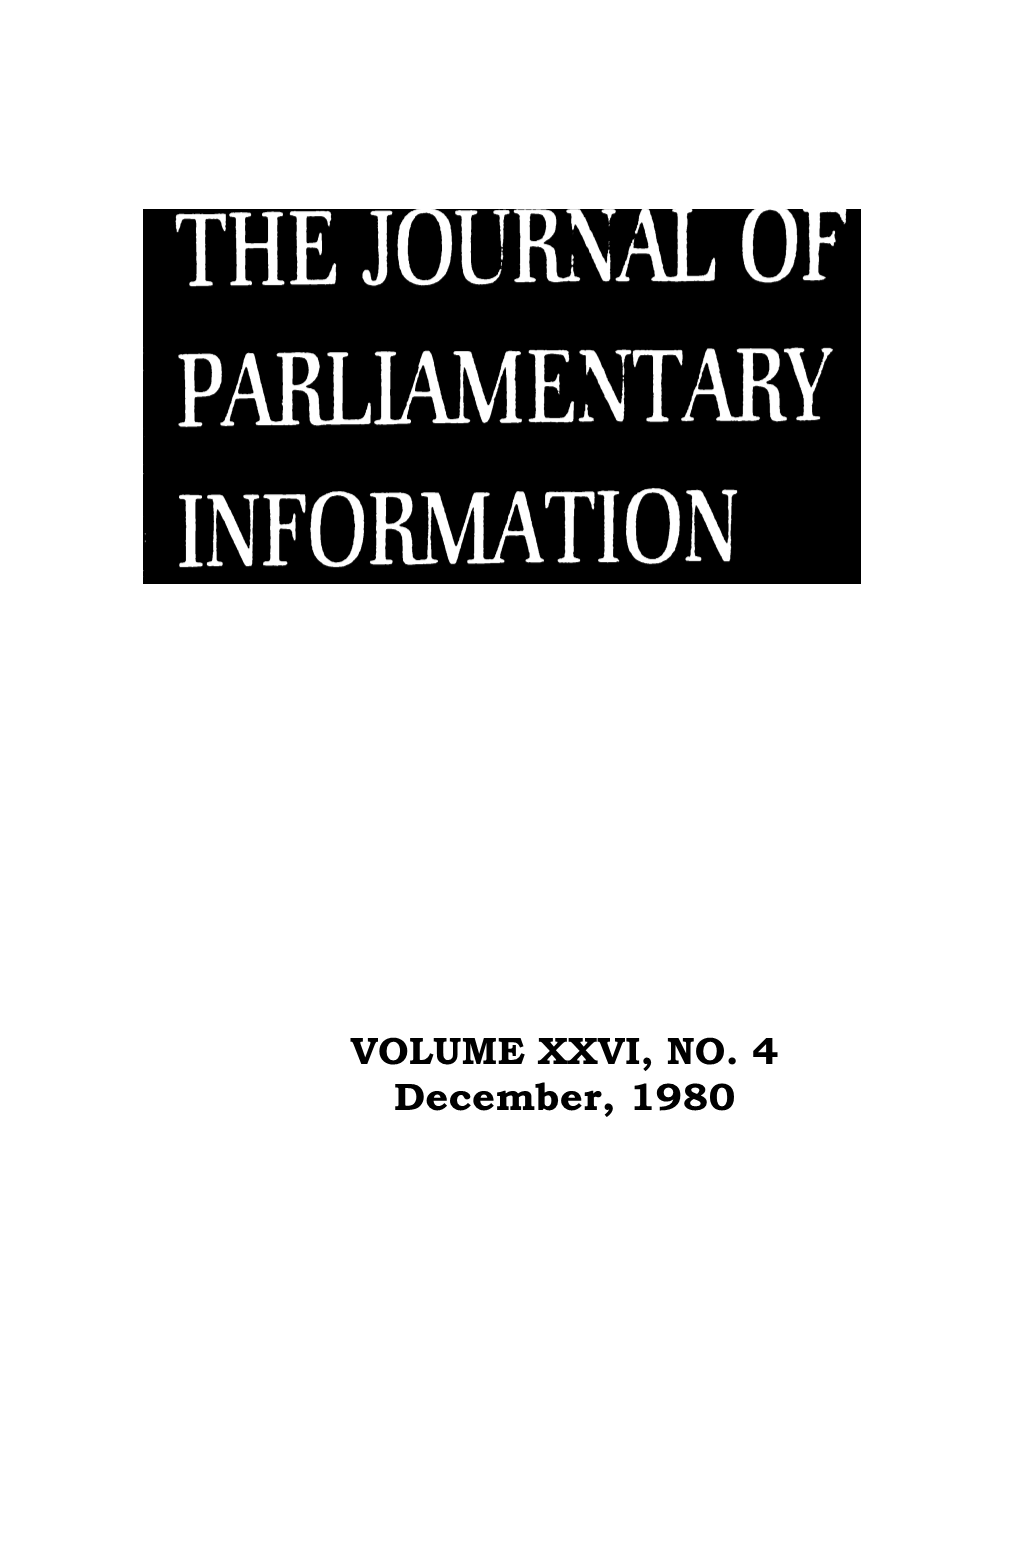 VOLUME XXVI, NO. 4 December, 1980 the JOURNAL of PA.RLIAMENTARY INFORMATION